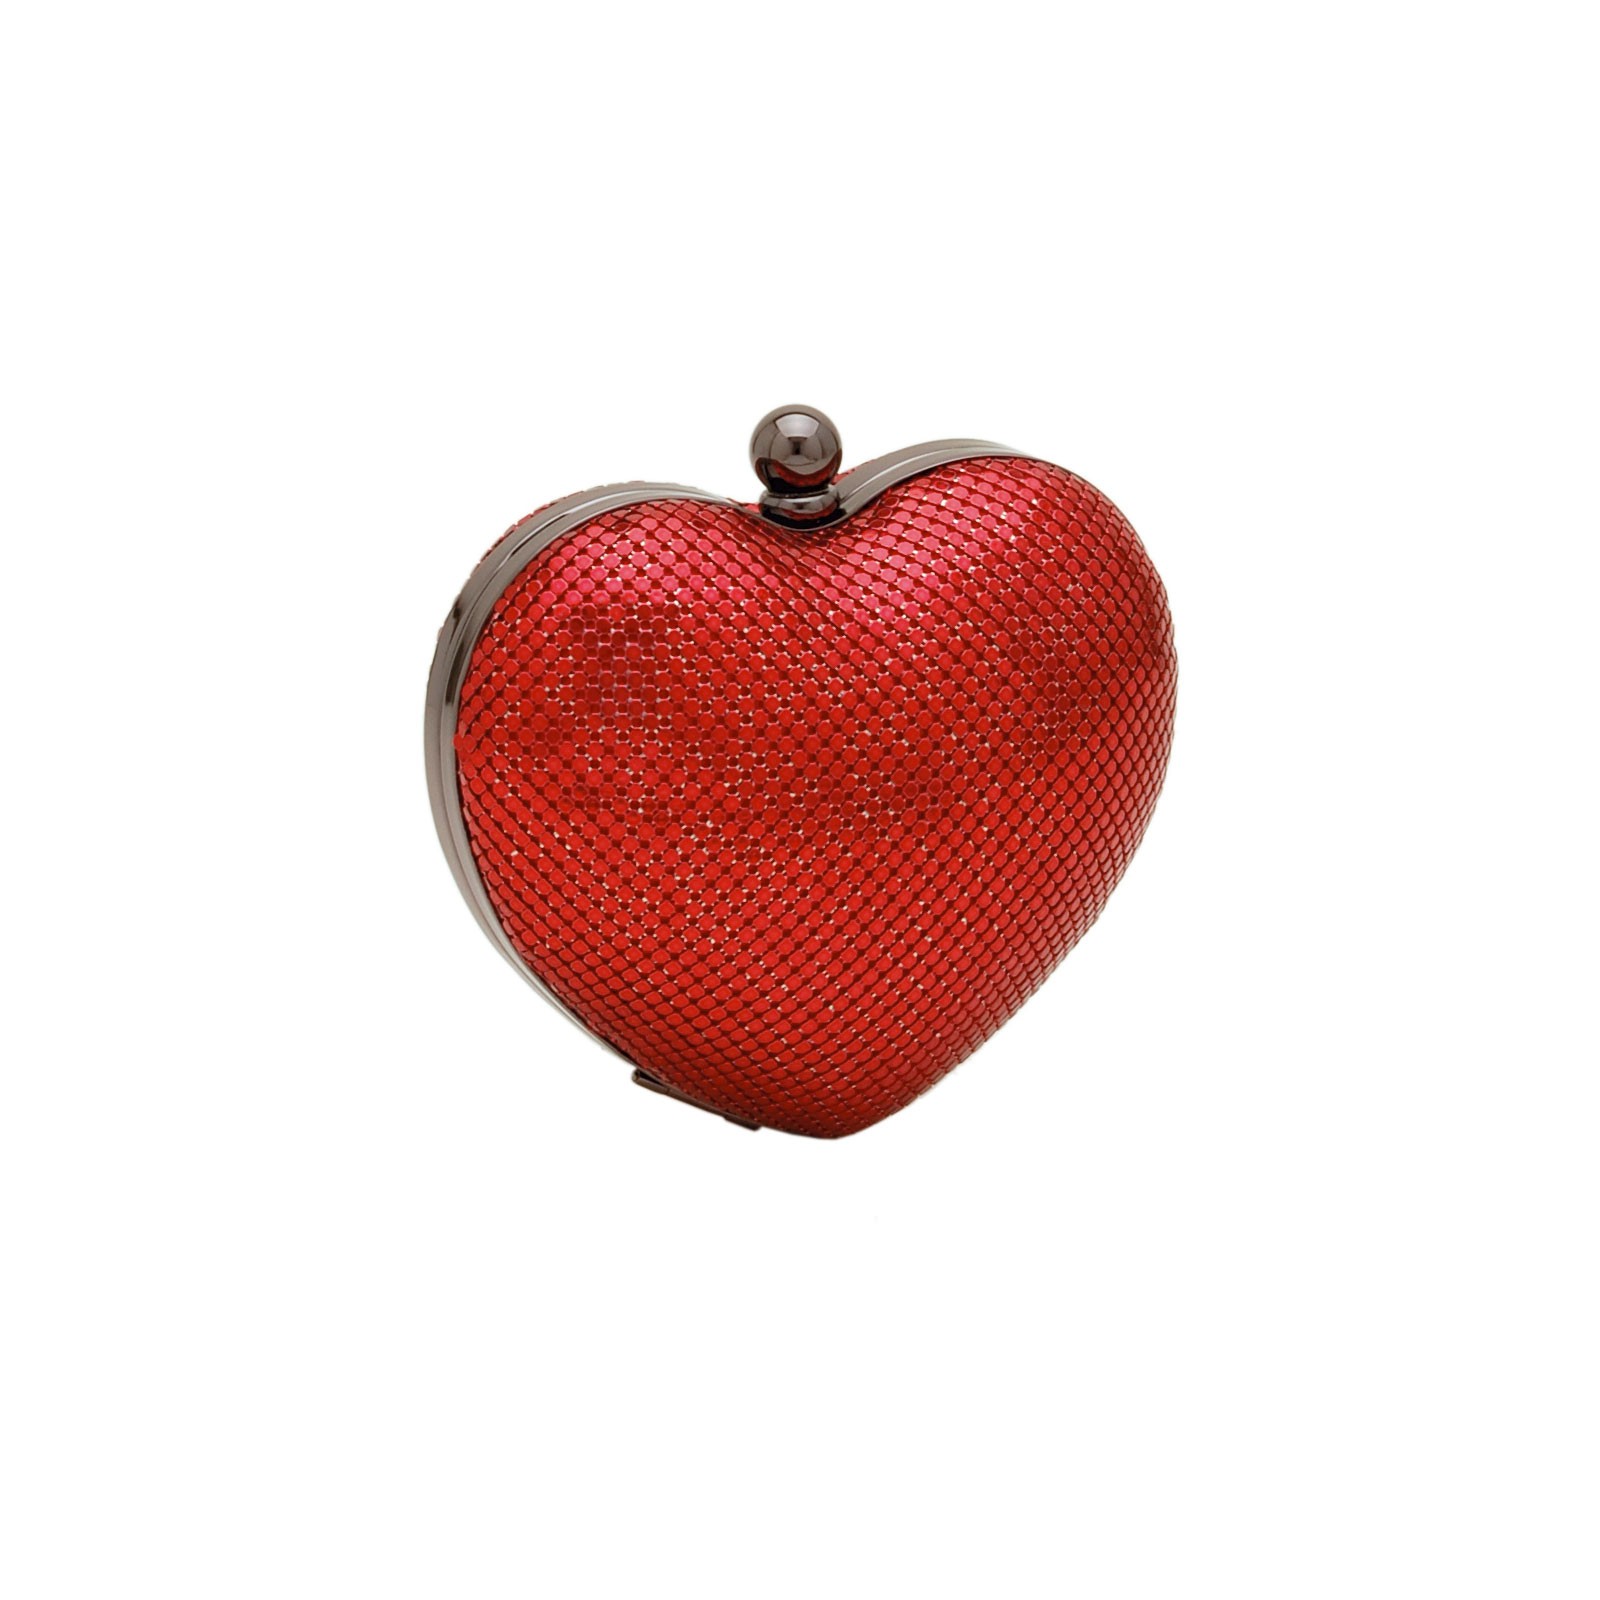 1-5777-Red-charity-heart-minaudiere-metallic-clutch-handbag-1600